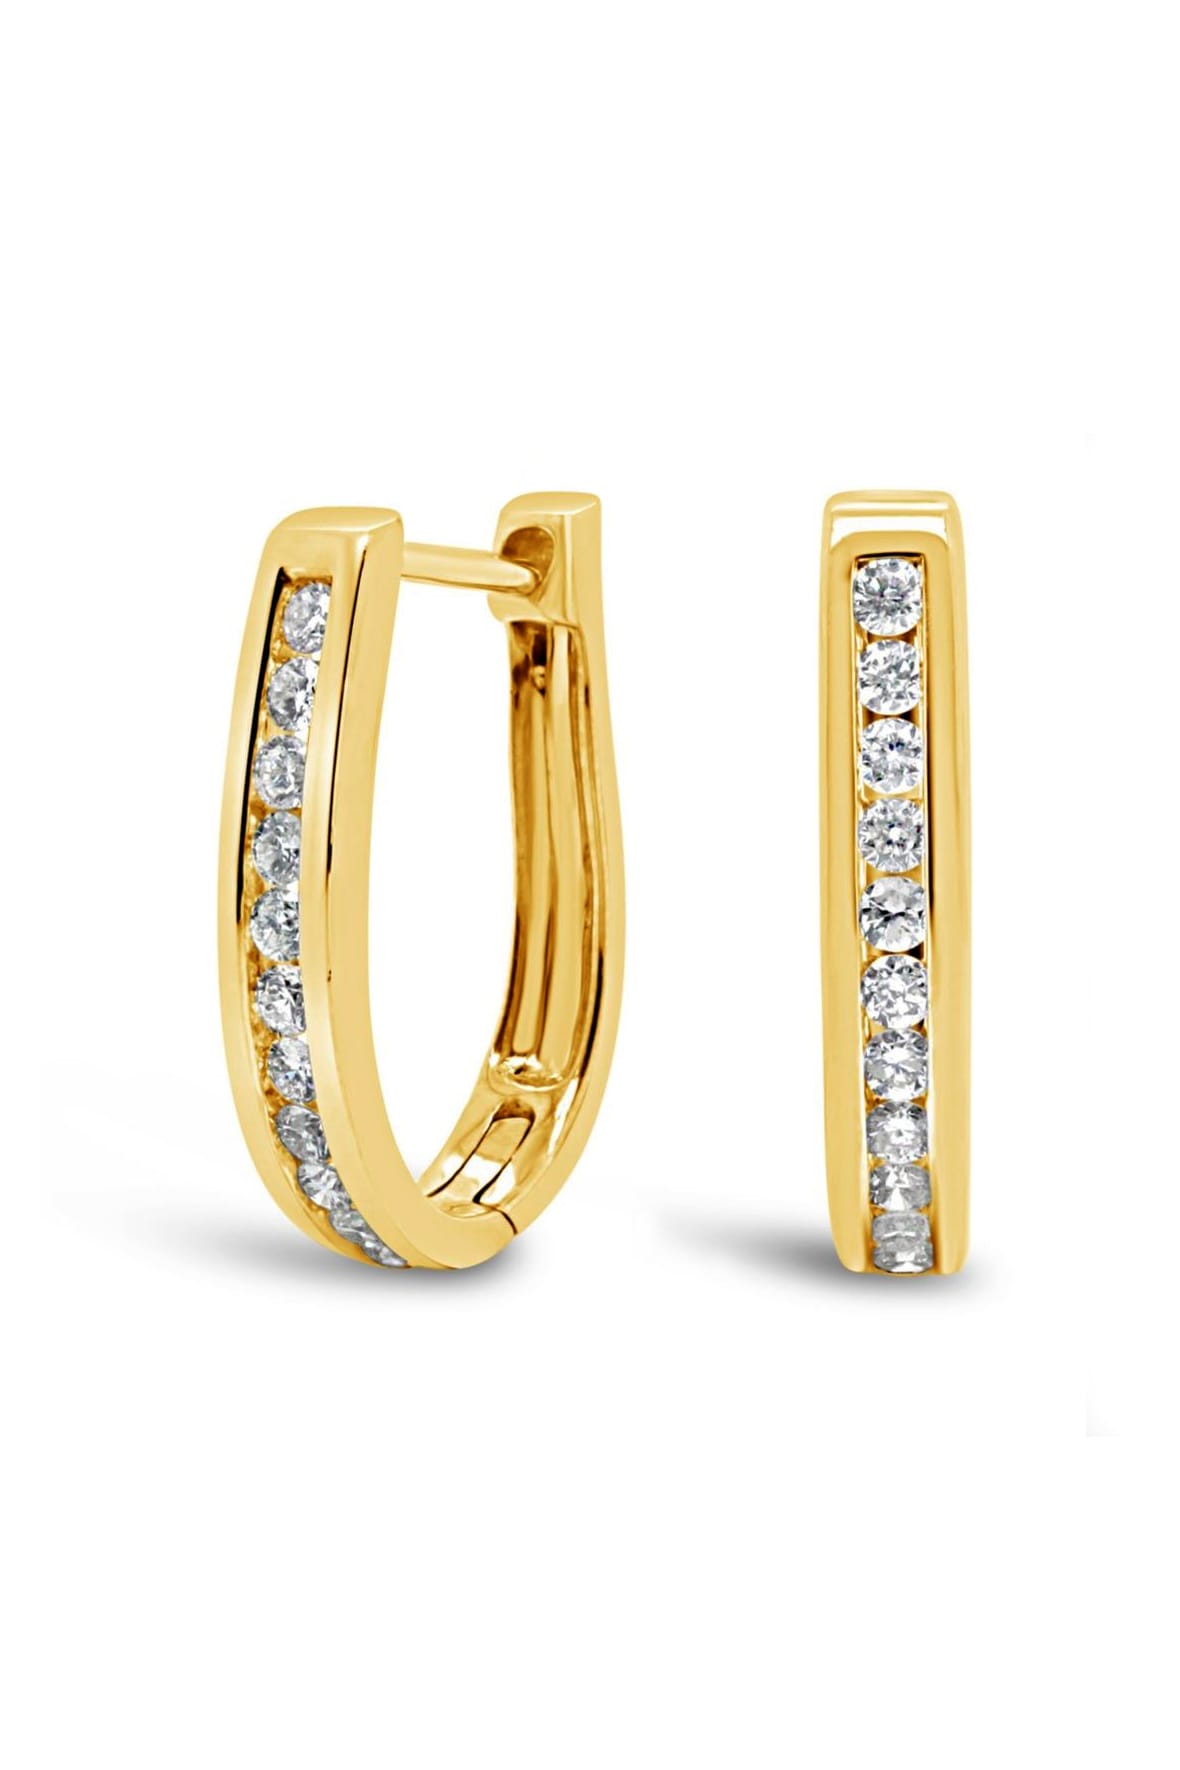 LeGassick Diamond Huggie Earrings available at LeGassick Diamonds and Jewellery Gold Coast, Australia